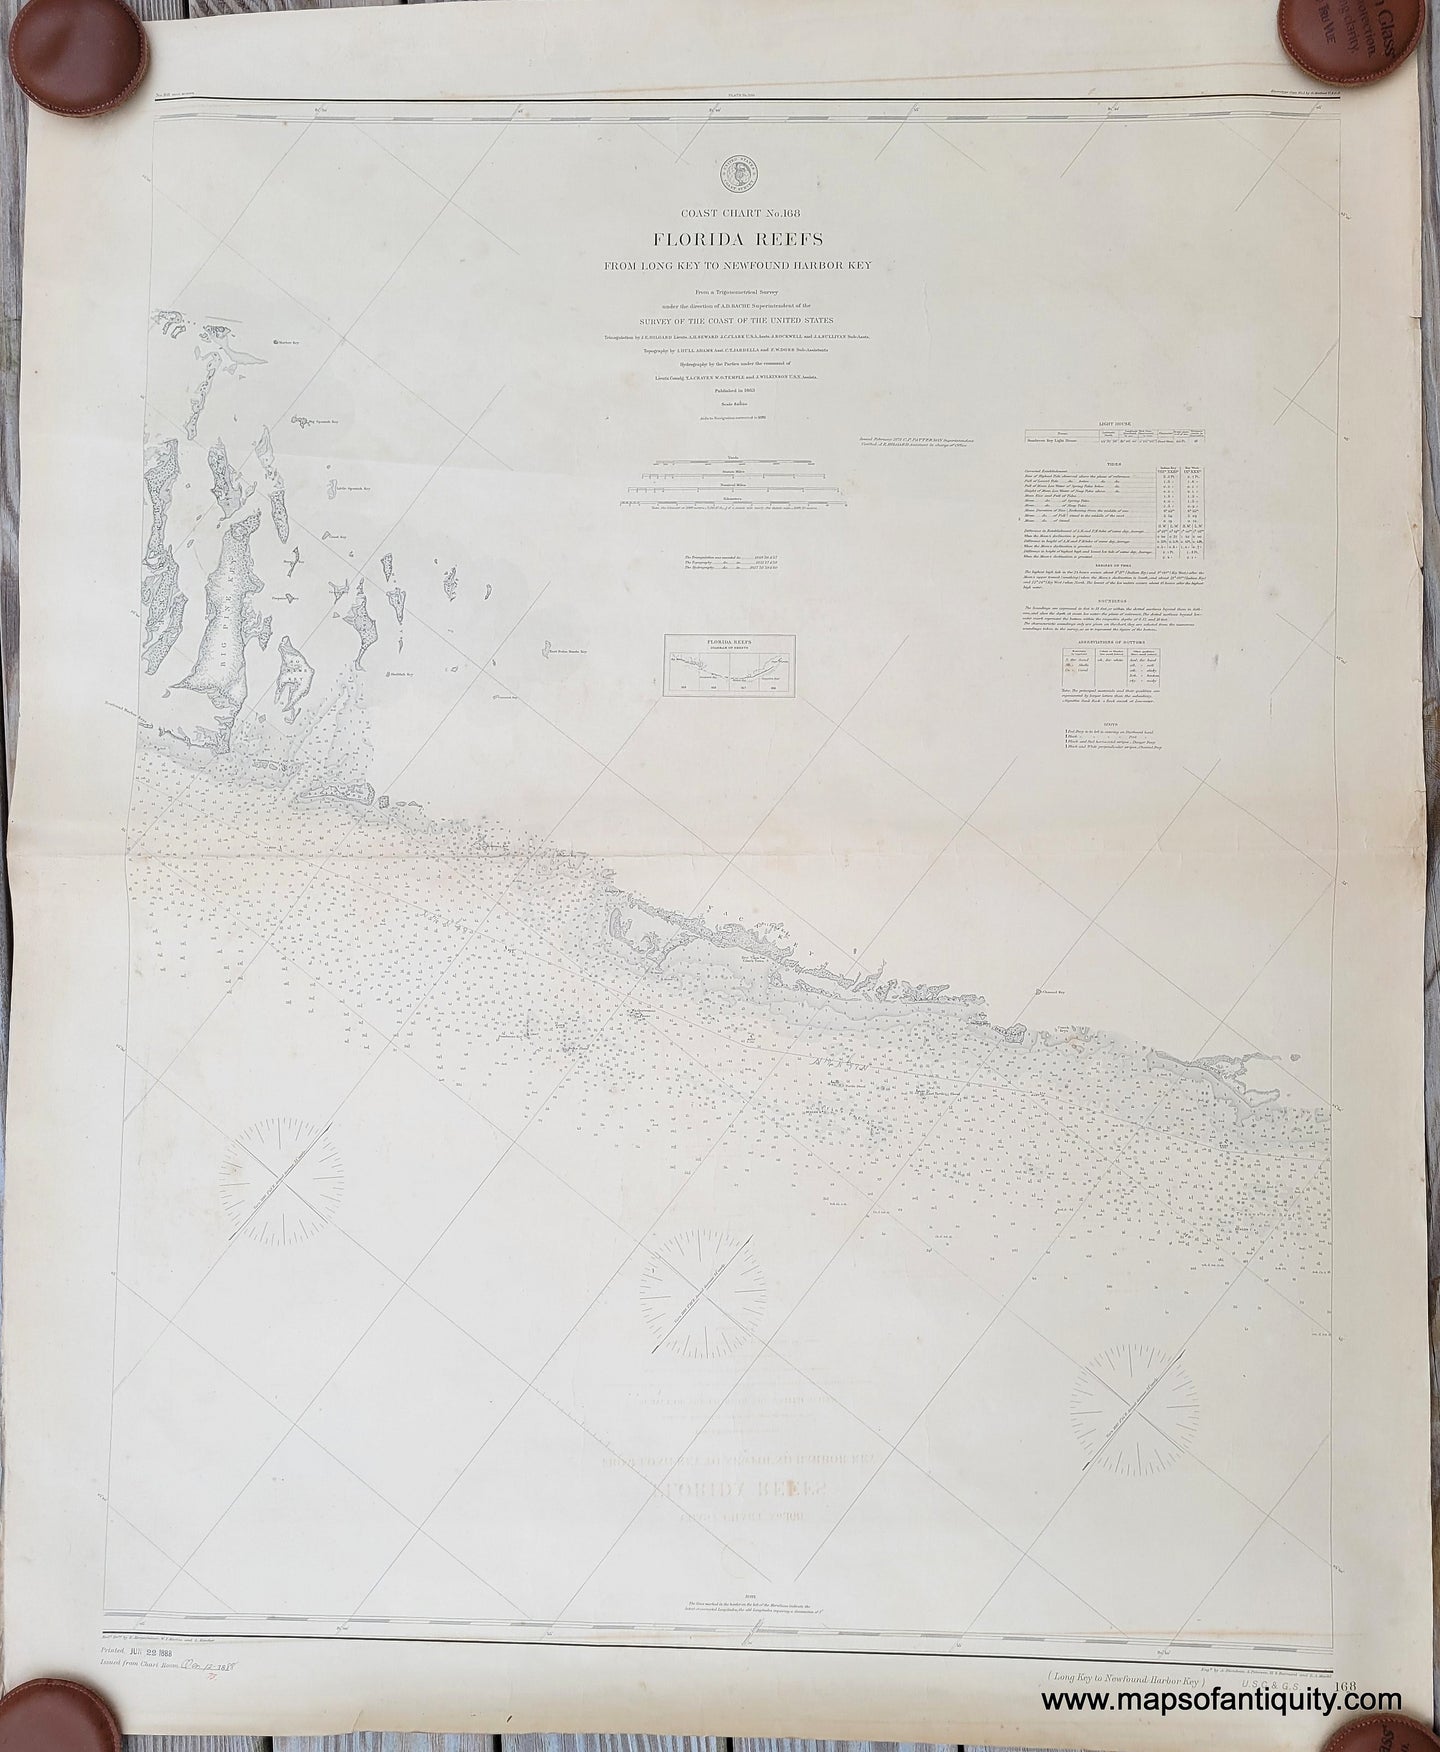 Genuine-Antique-Nautical-Chart-Coast-Chart-No.-168-Florida-Reefs-From-Long-Key-to-Newfound-Harbor-Key-1863-1888-U.S.-Coast-Survey-Maps-Of-Antiquity